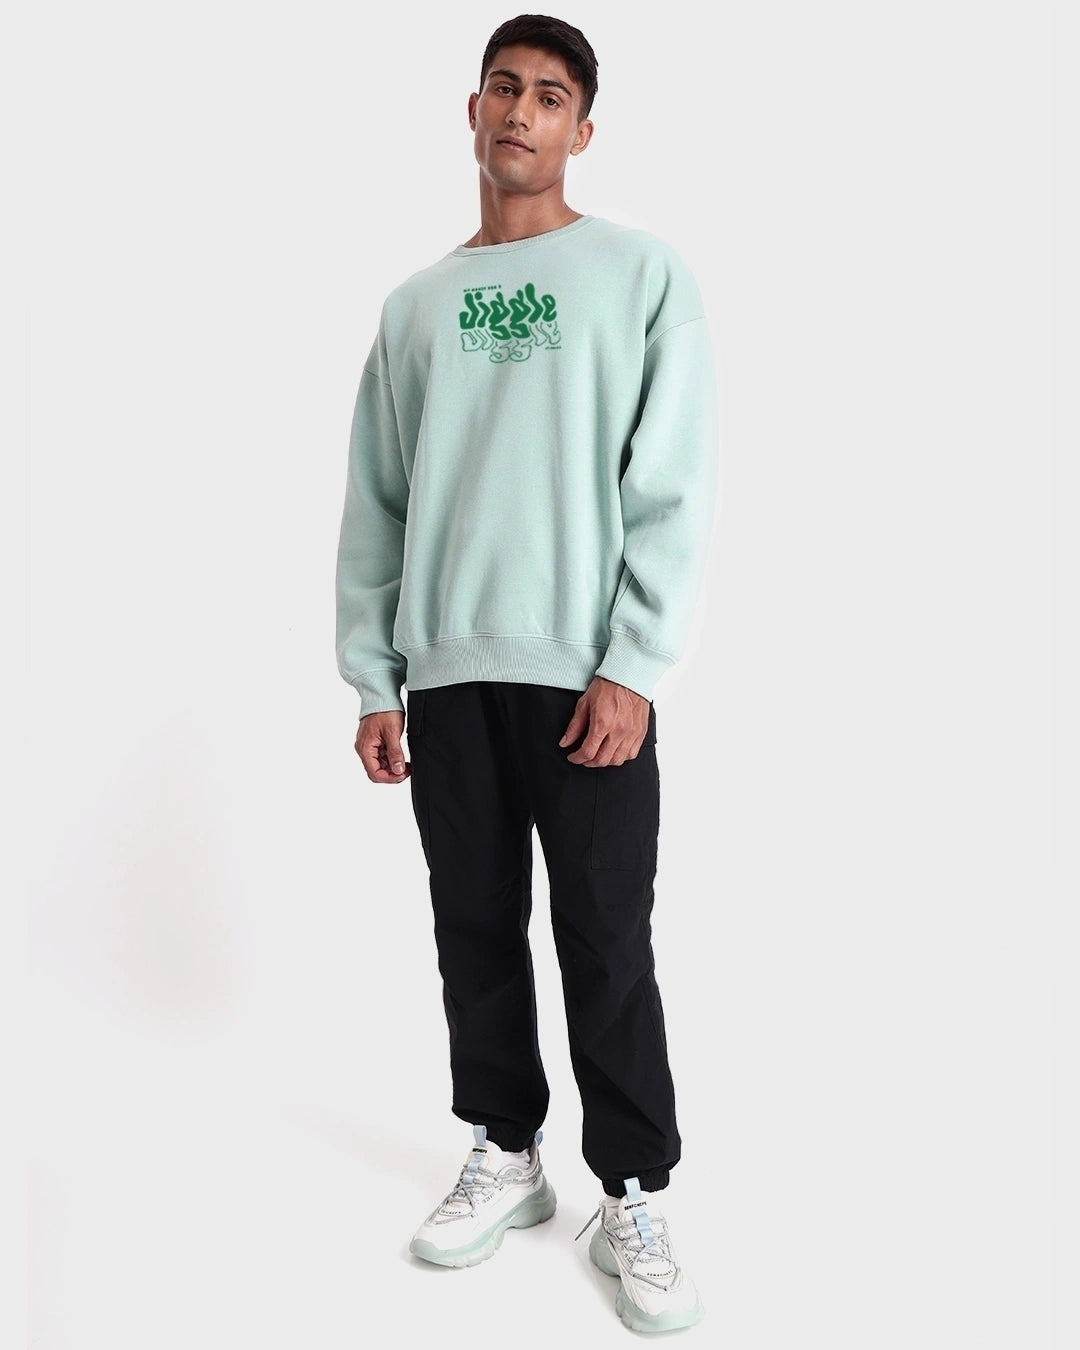 Men's Sage Green Money Don't Jiggle Graphic Printed Overized Sweatshirt